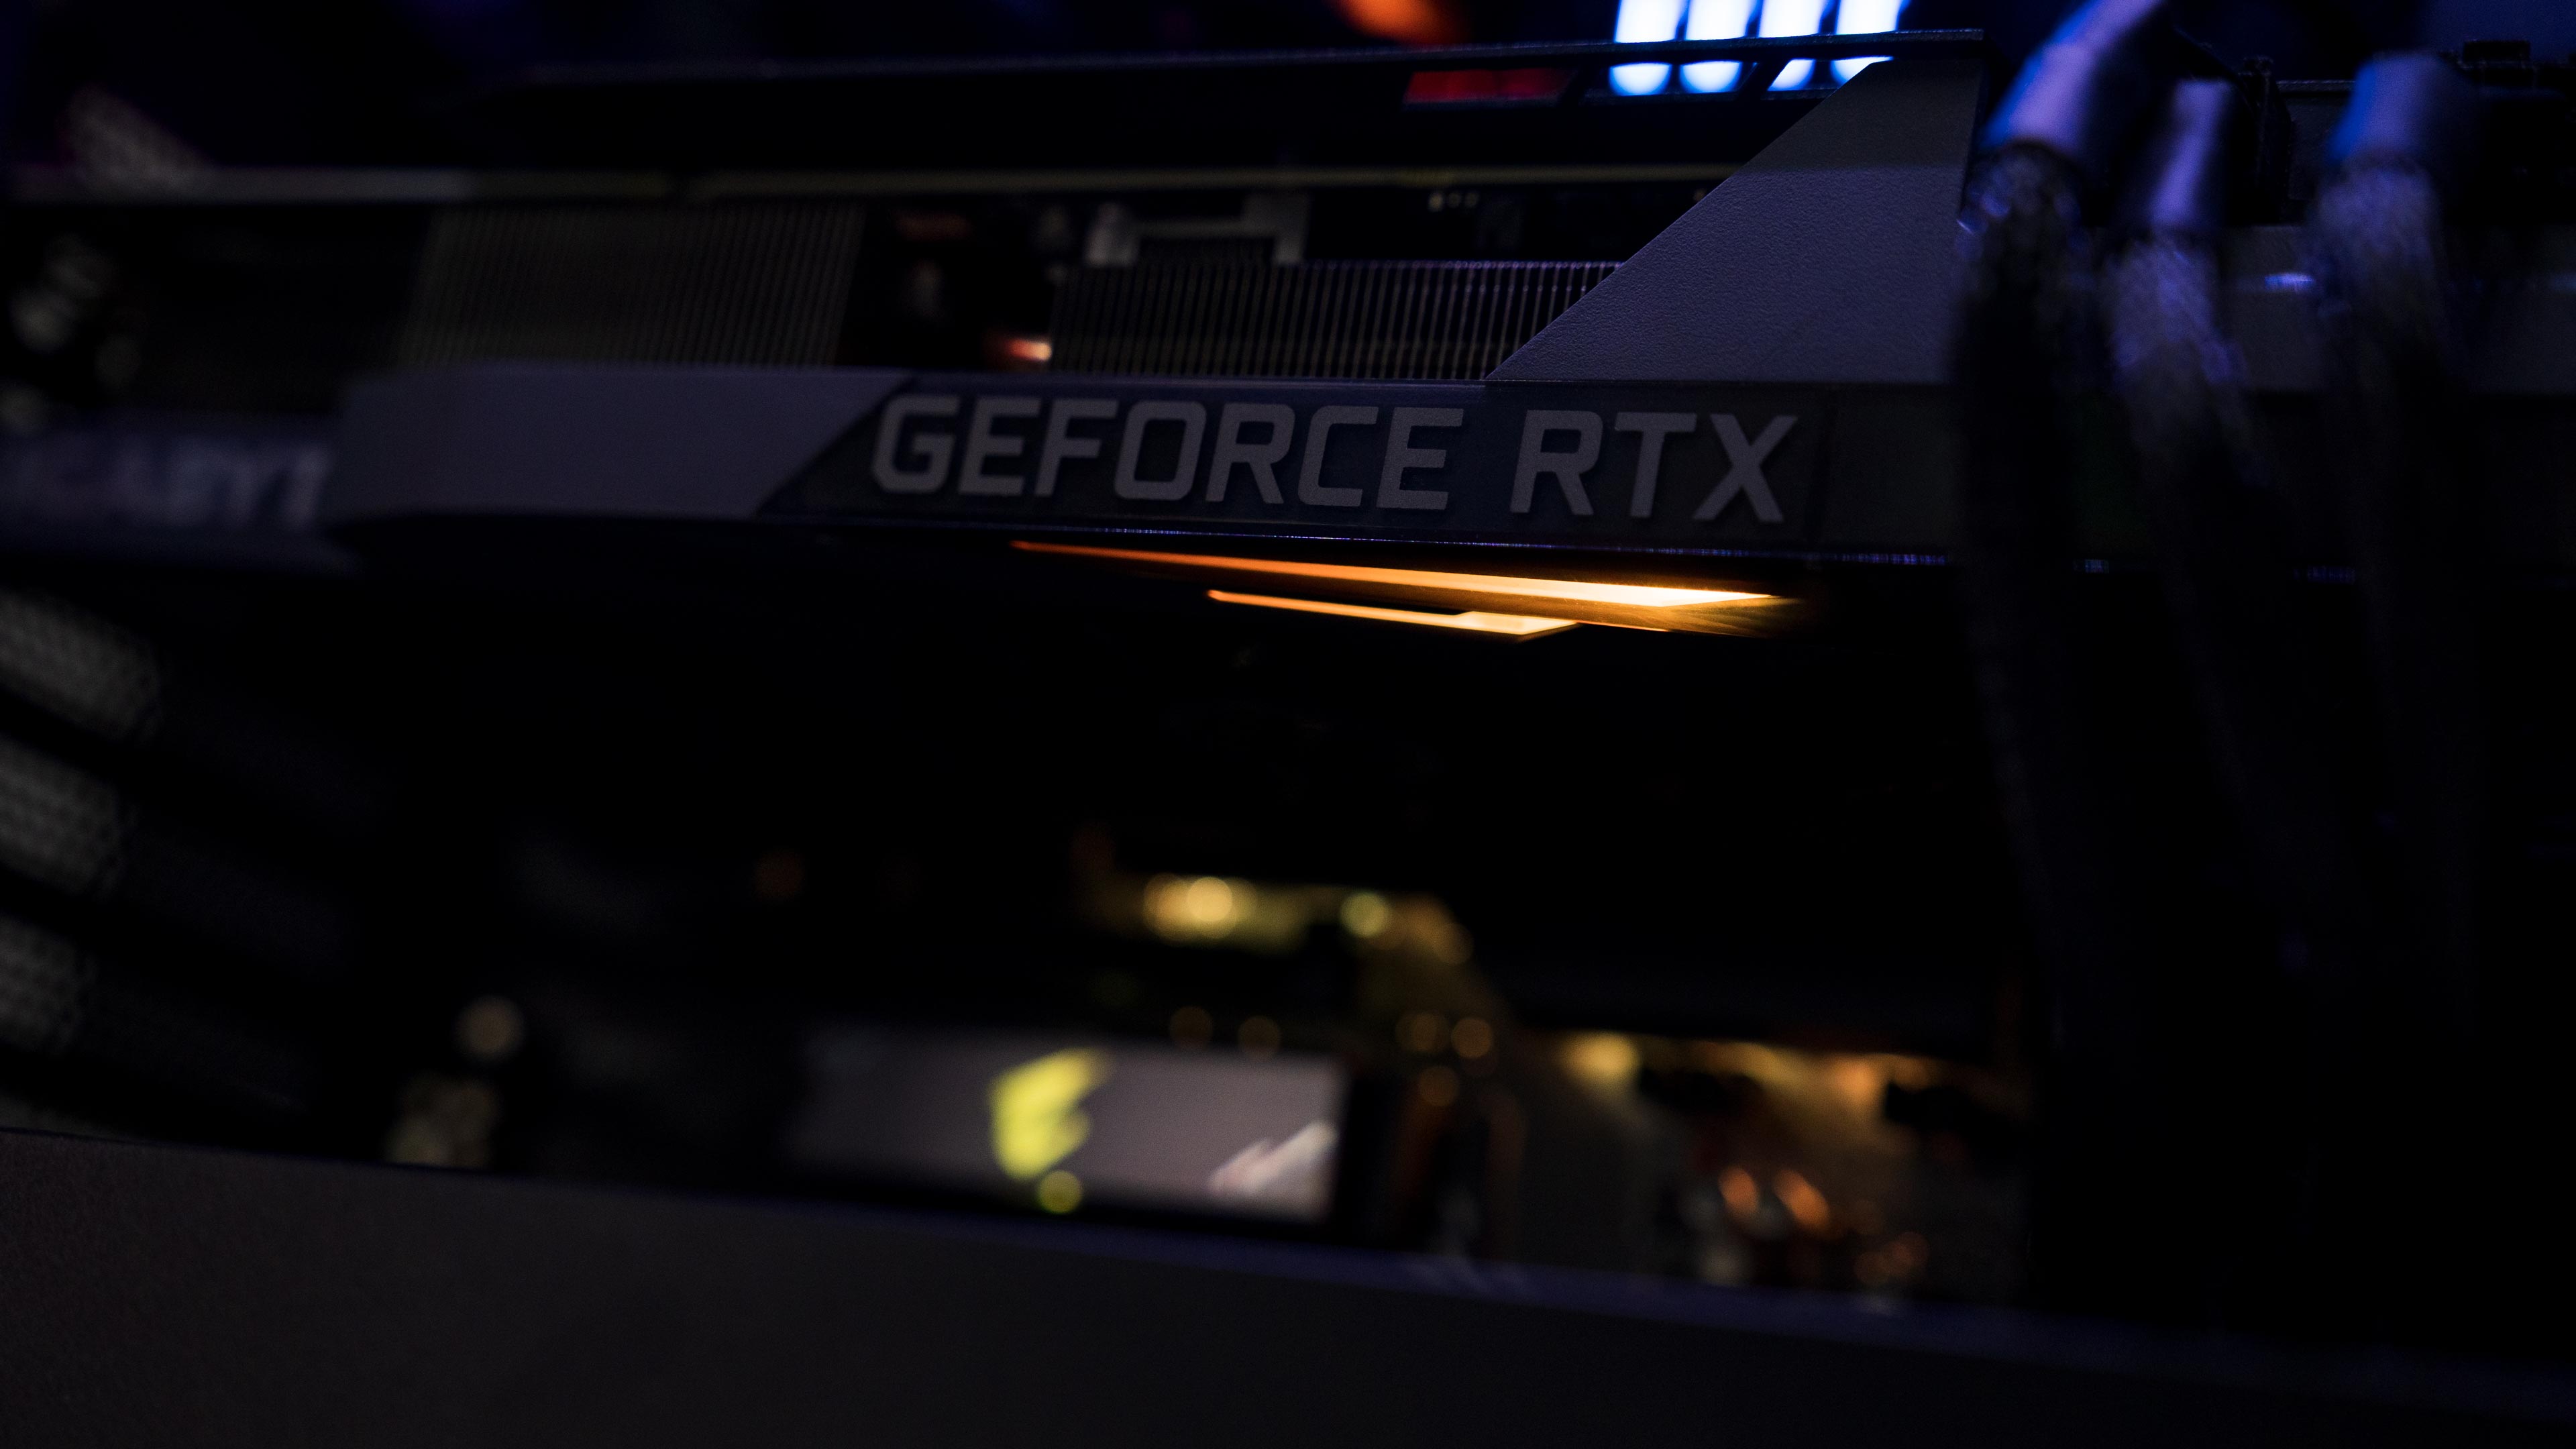 Gigabyte RTX 3080 Gaming PC 2021 (9)